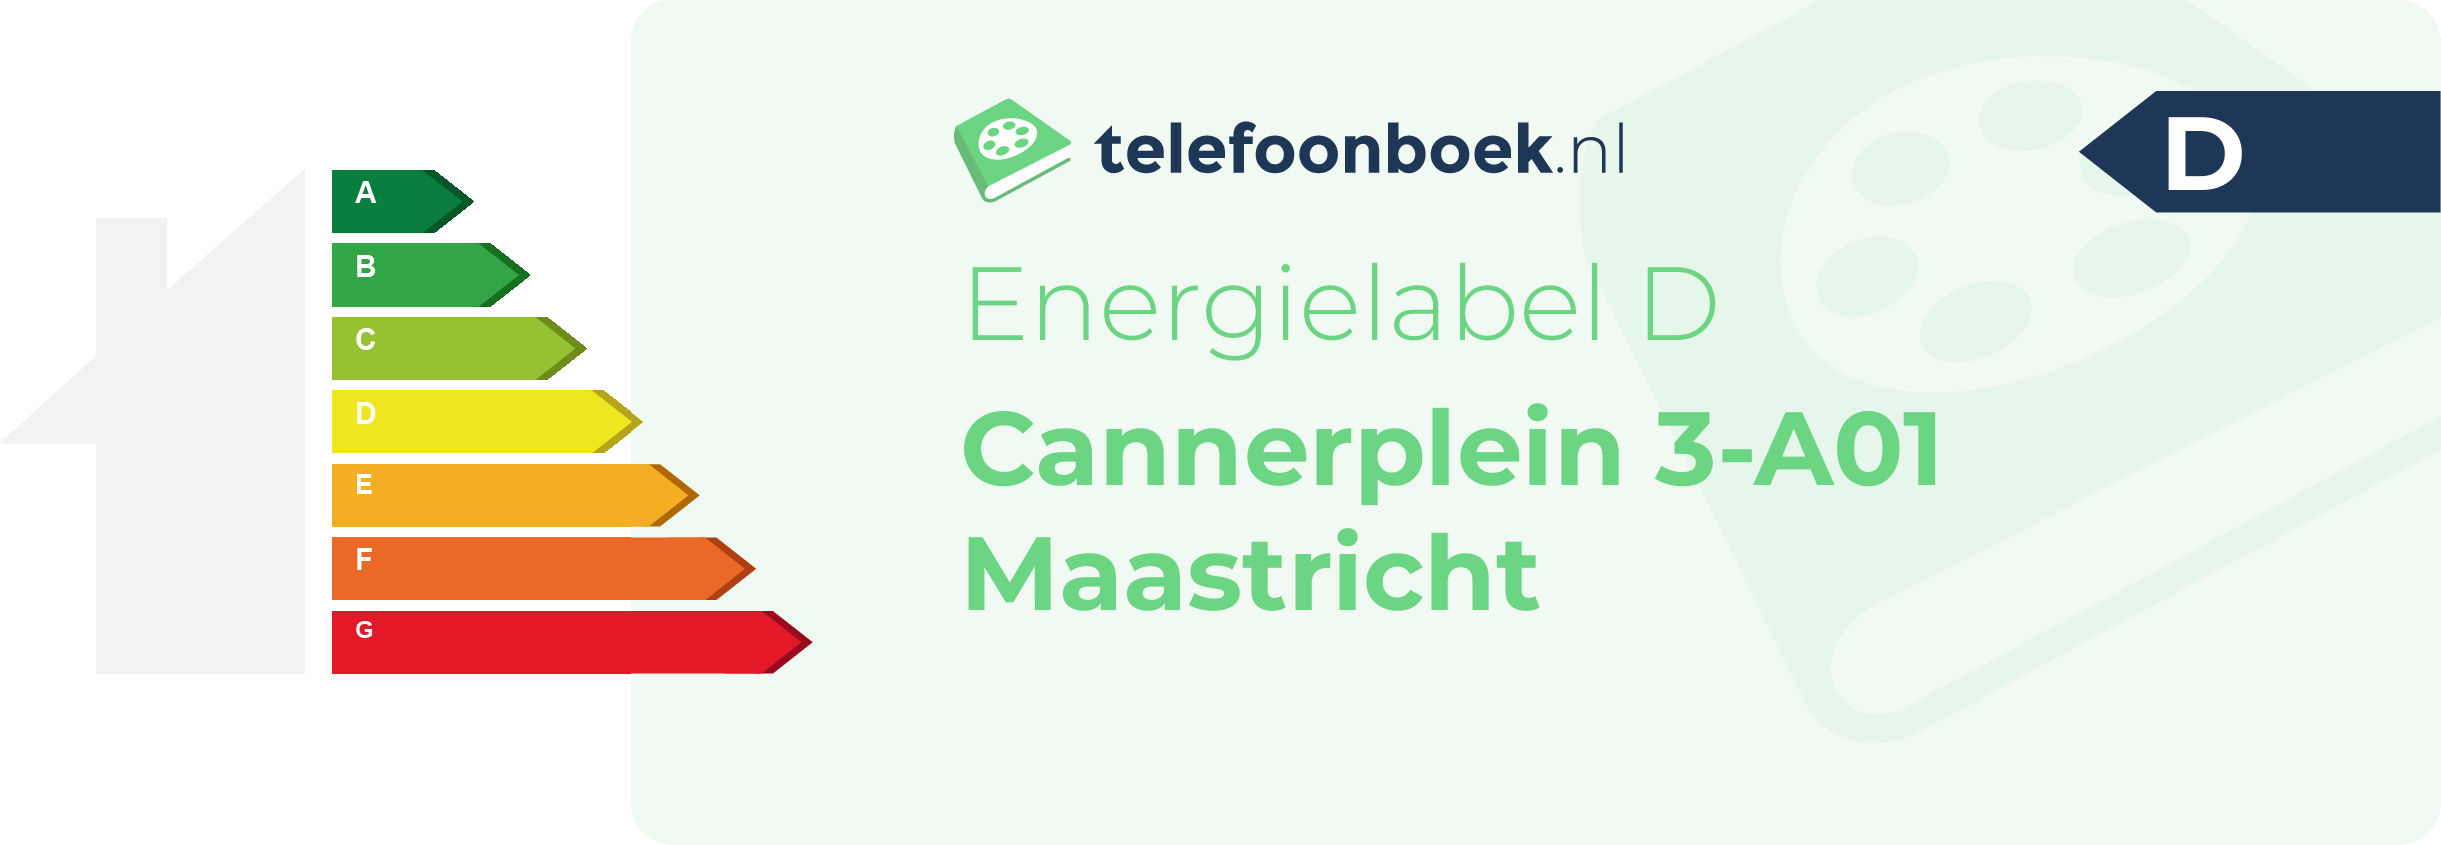 Energielabel Cannerplein 3-A01 Maastricht